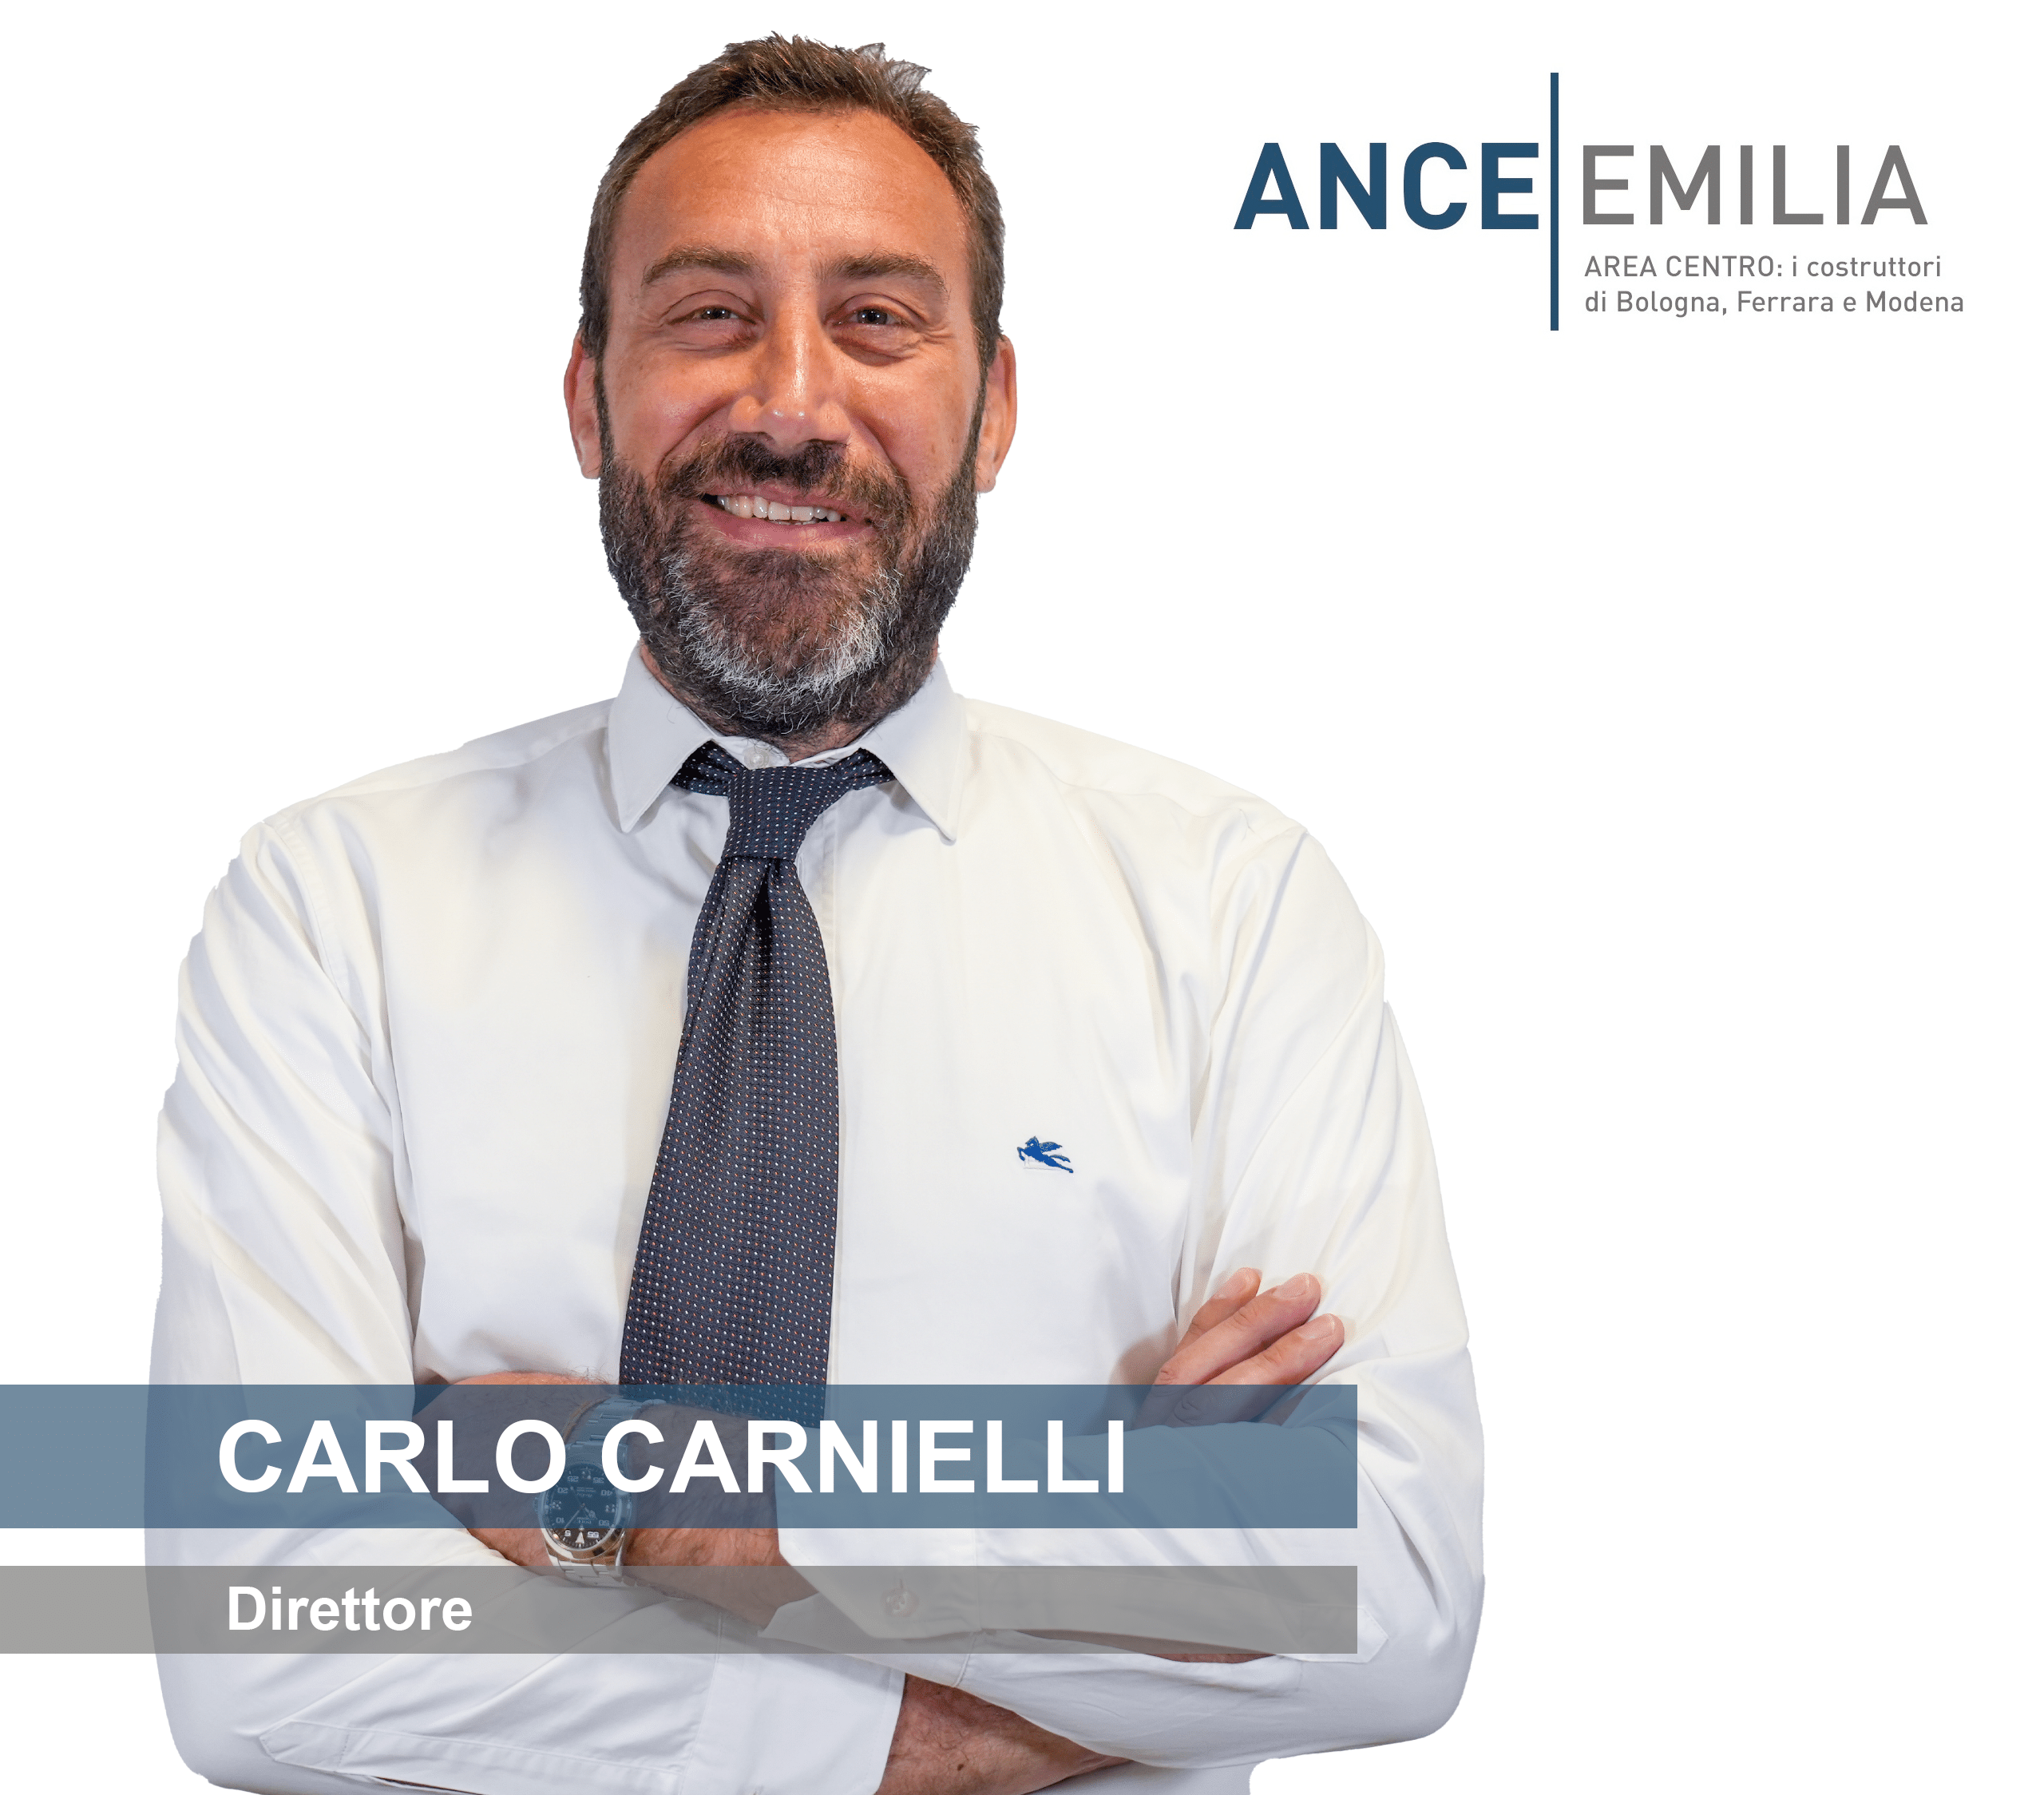 CARLO CARNIELLI